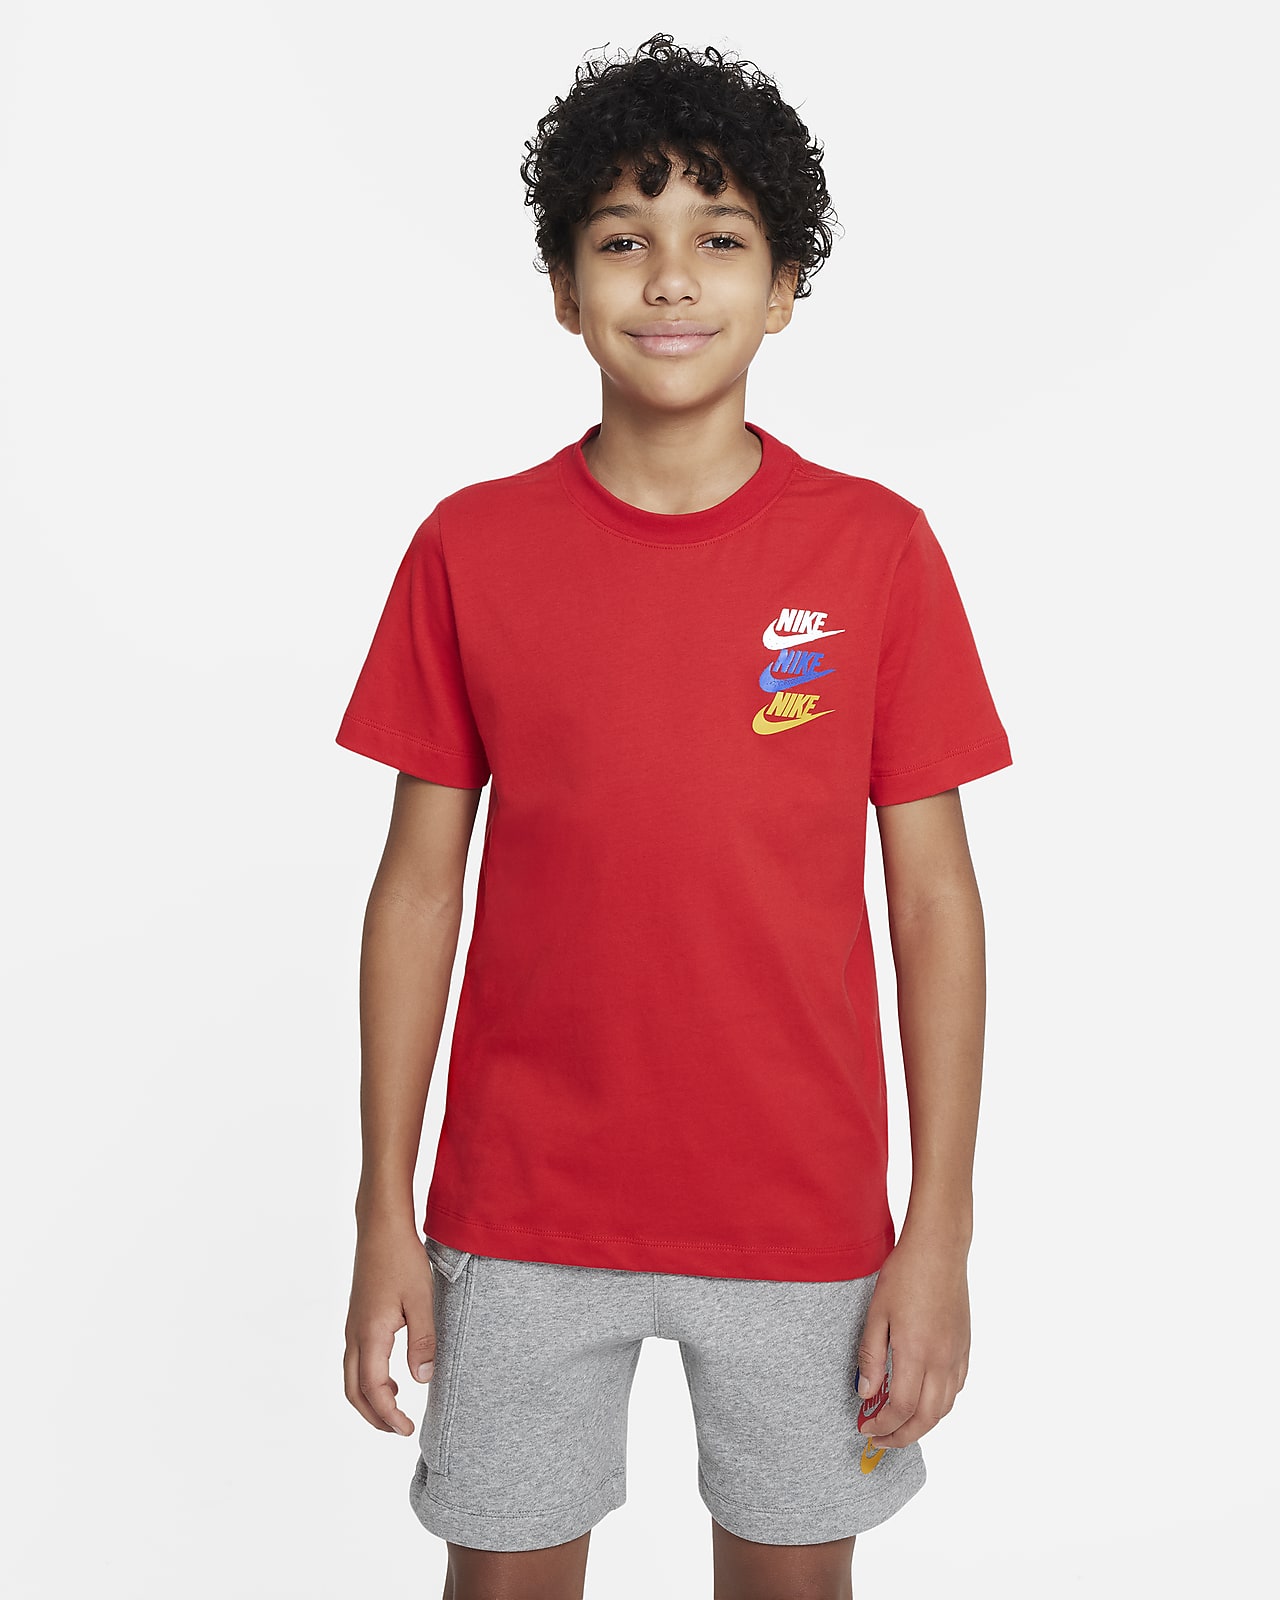 T-shirt Nike Sportswear Standard Issue pour ado (garçon)